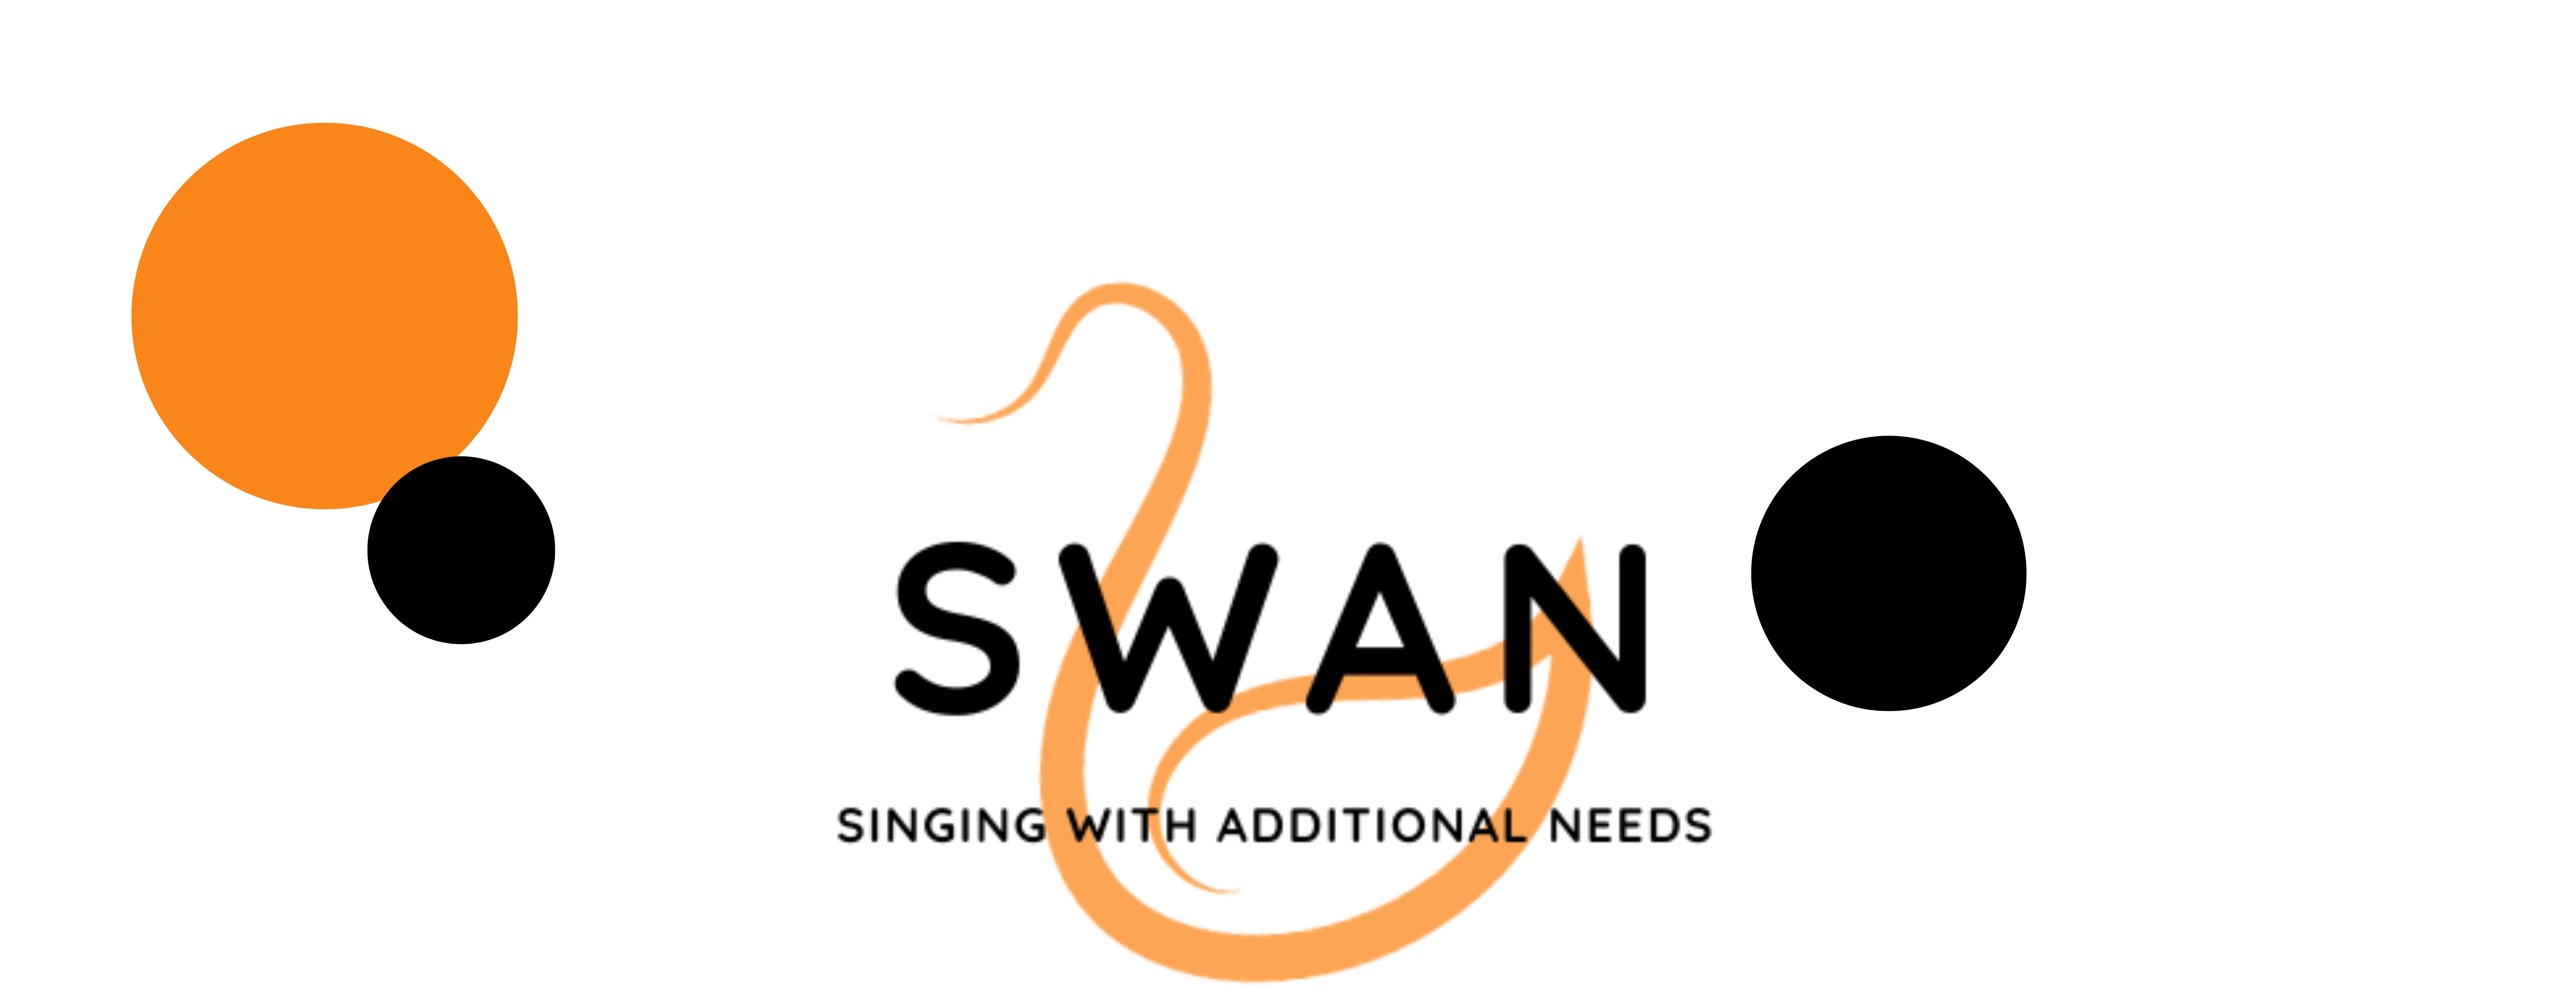 swann banner with logo 